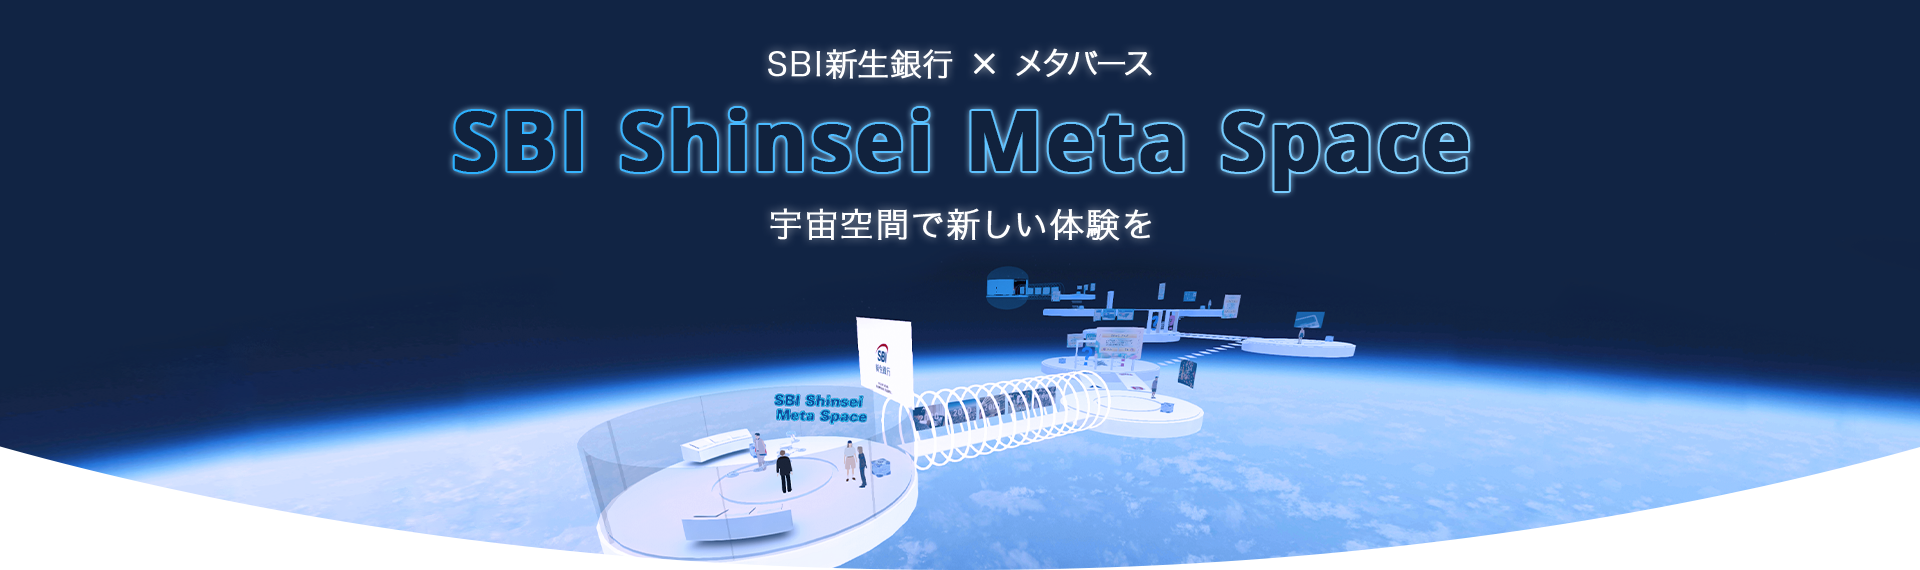 SBI新生銀行 × メタバース 「SBI Shinsei Meta Space」 宇宙空間で新しい体験を